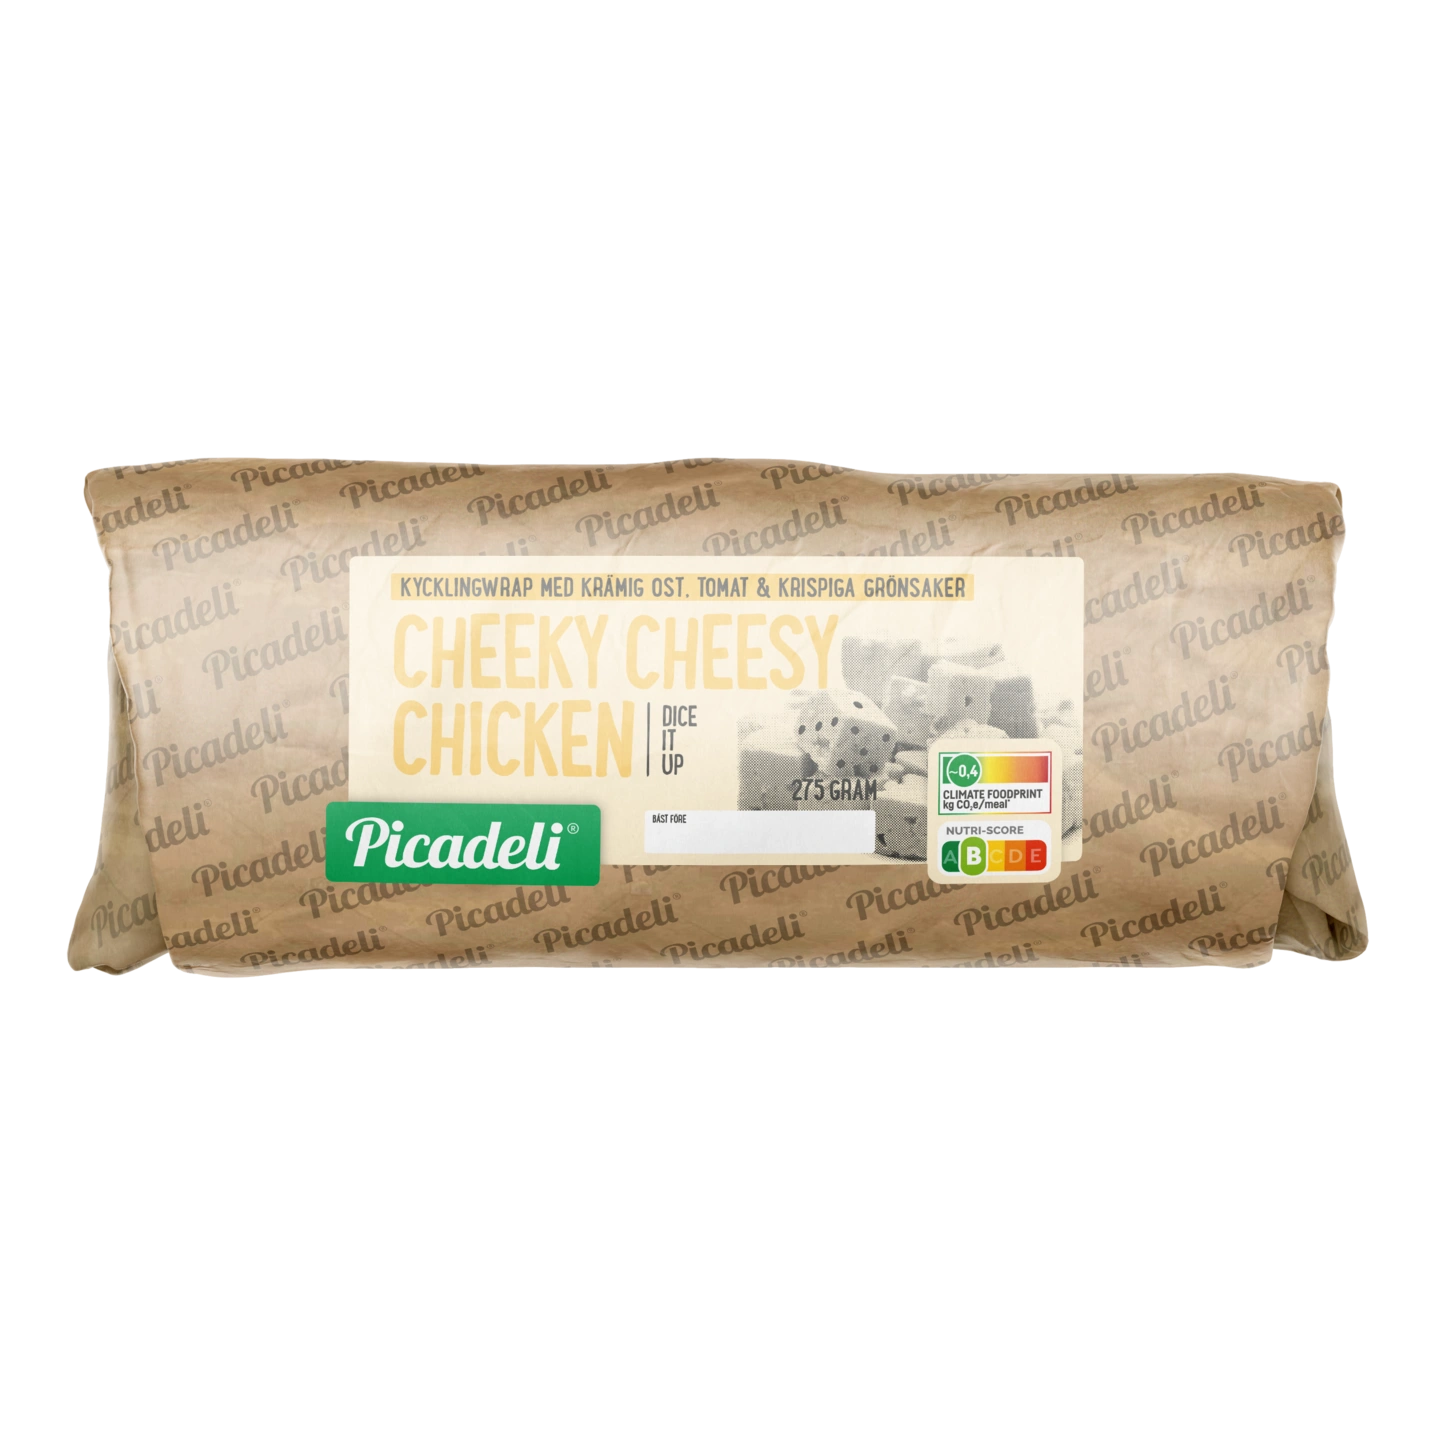 Picadeli Wrap Cheeky cheesy chicken